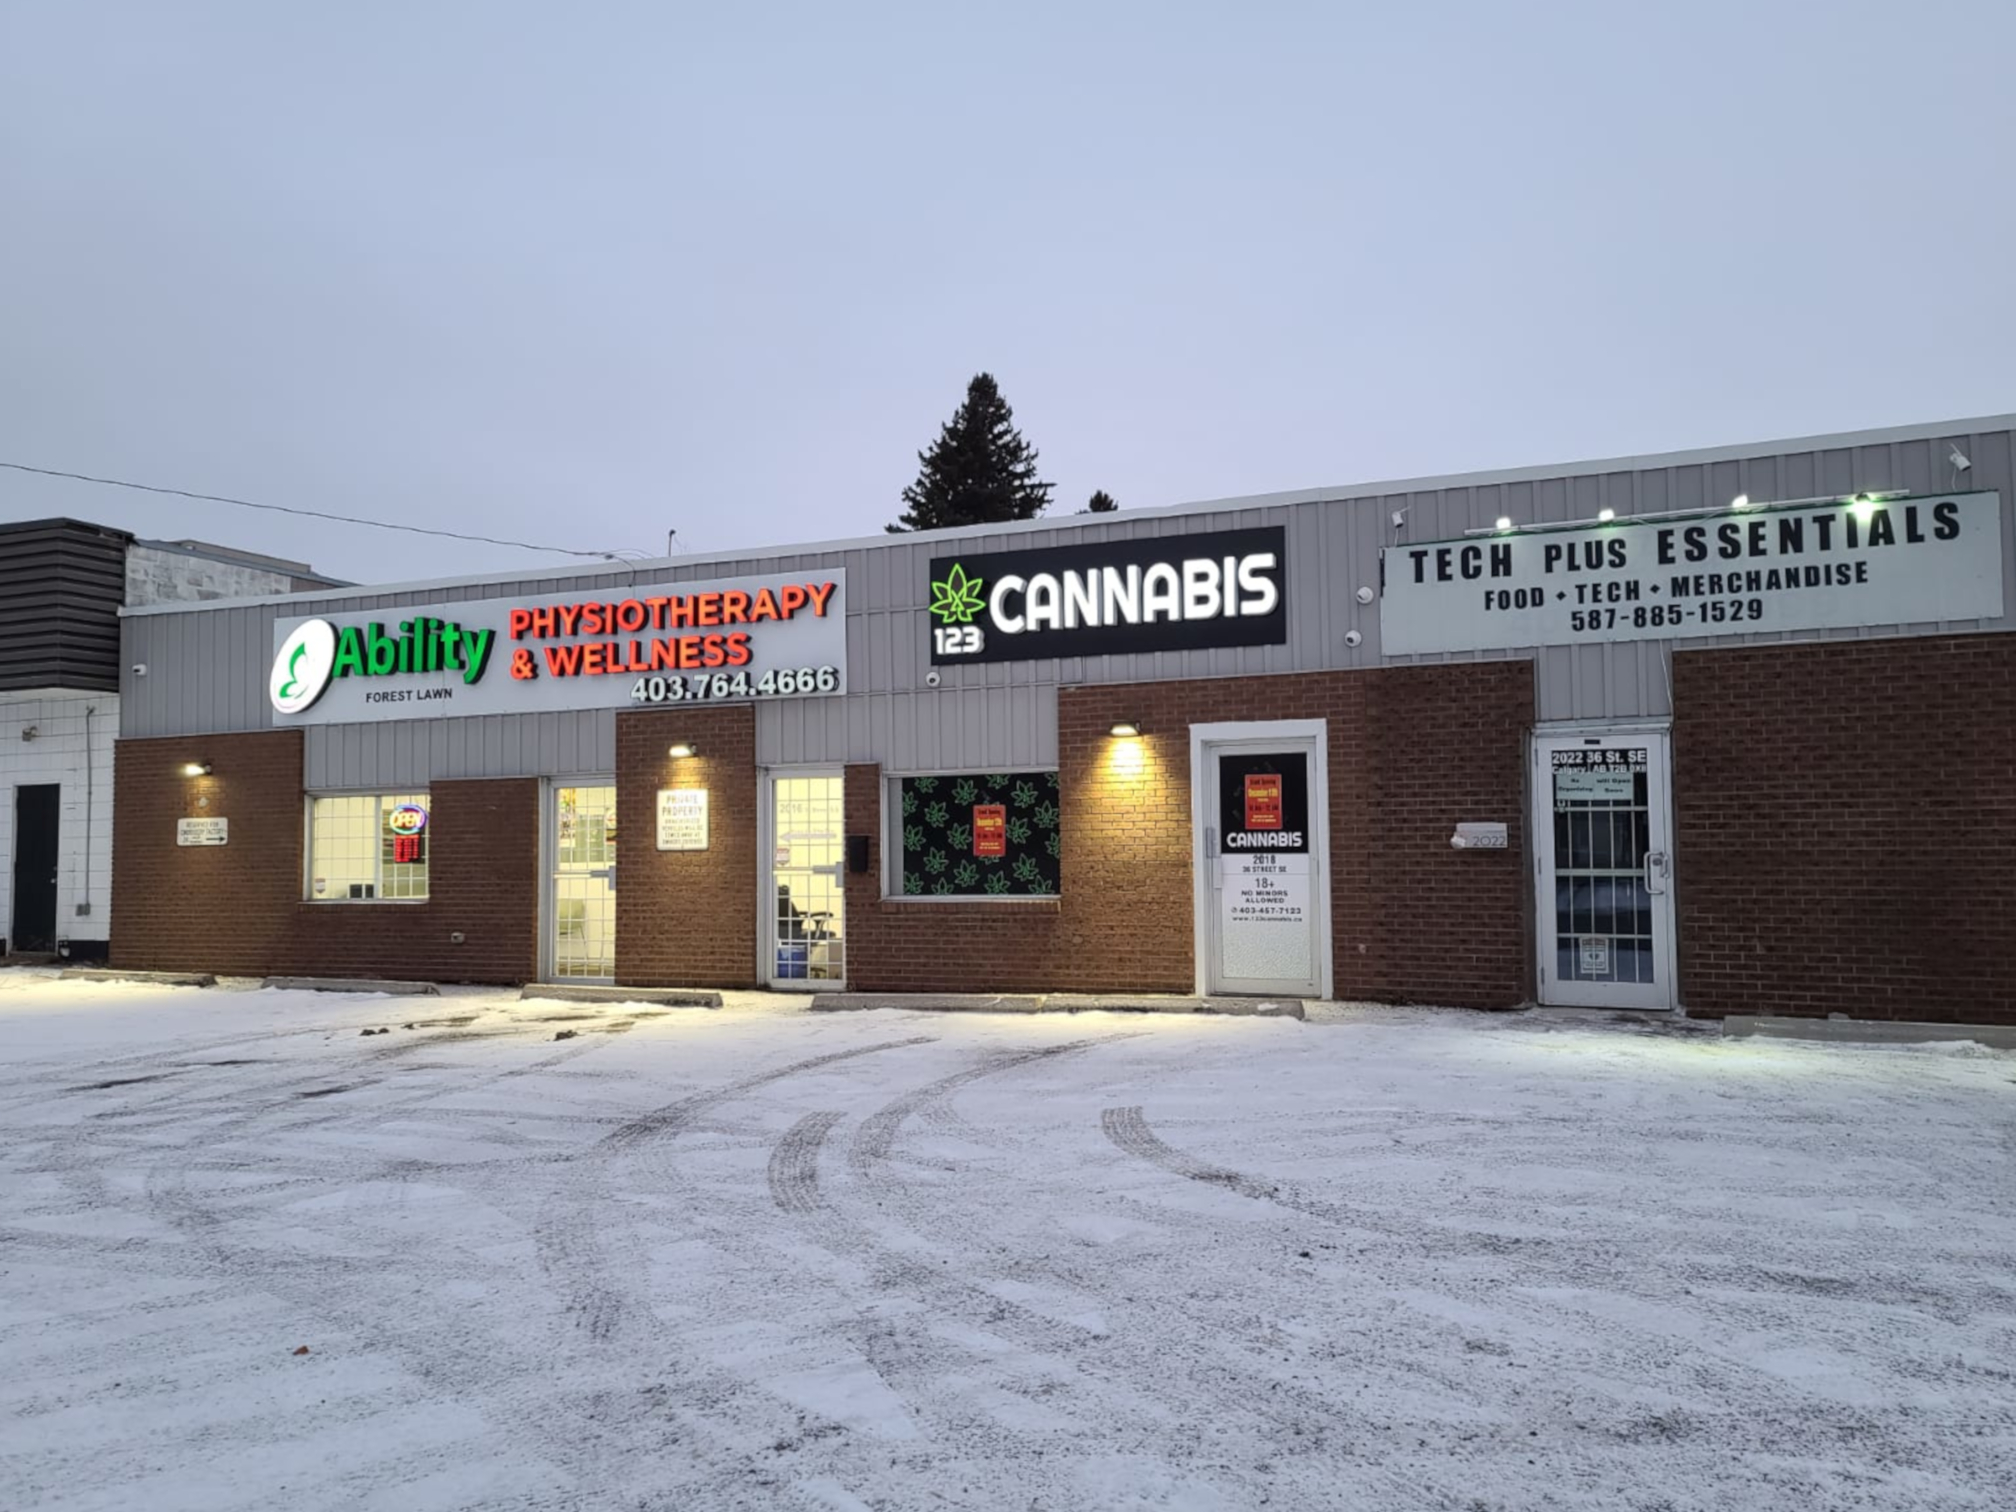 123 Cannabis Calgary Location